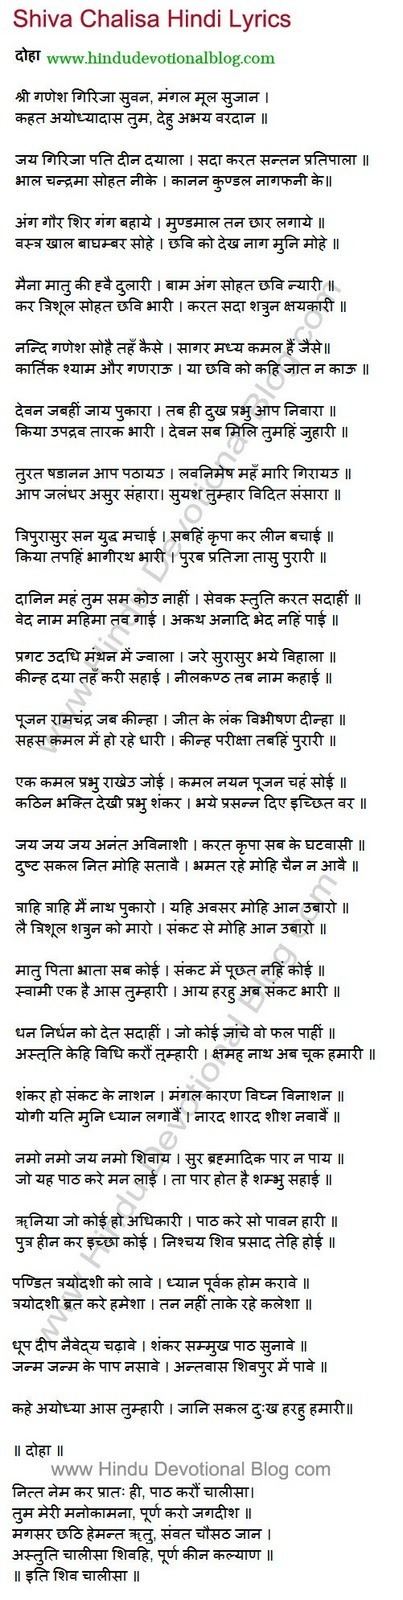 Shiv Chalisa Shiva Chalisa Lyrics in Hindi Language Hindu Devotional Blog